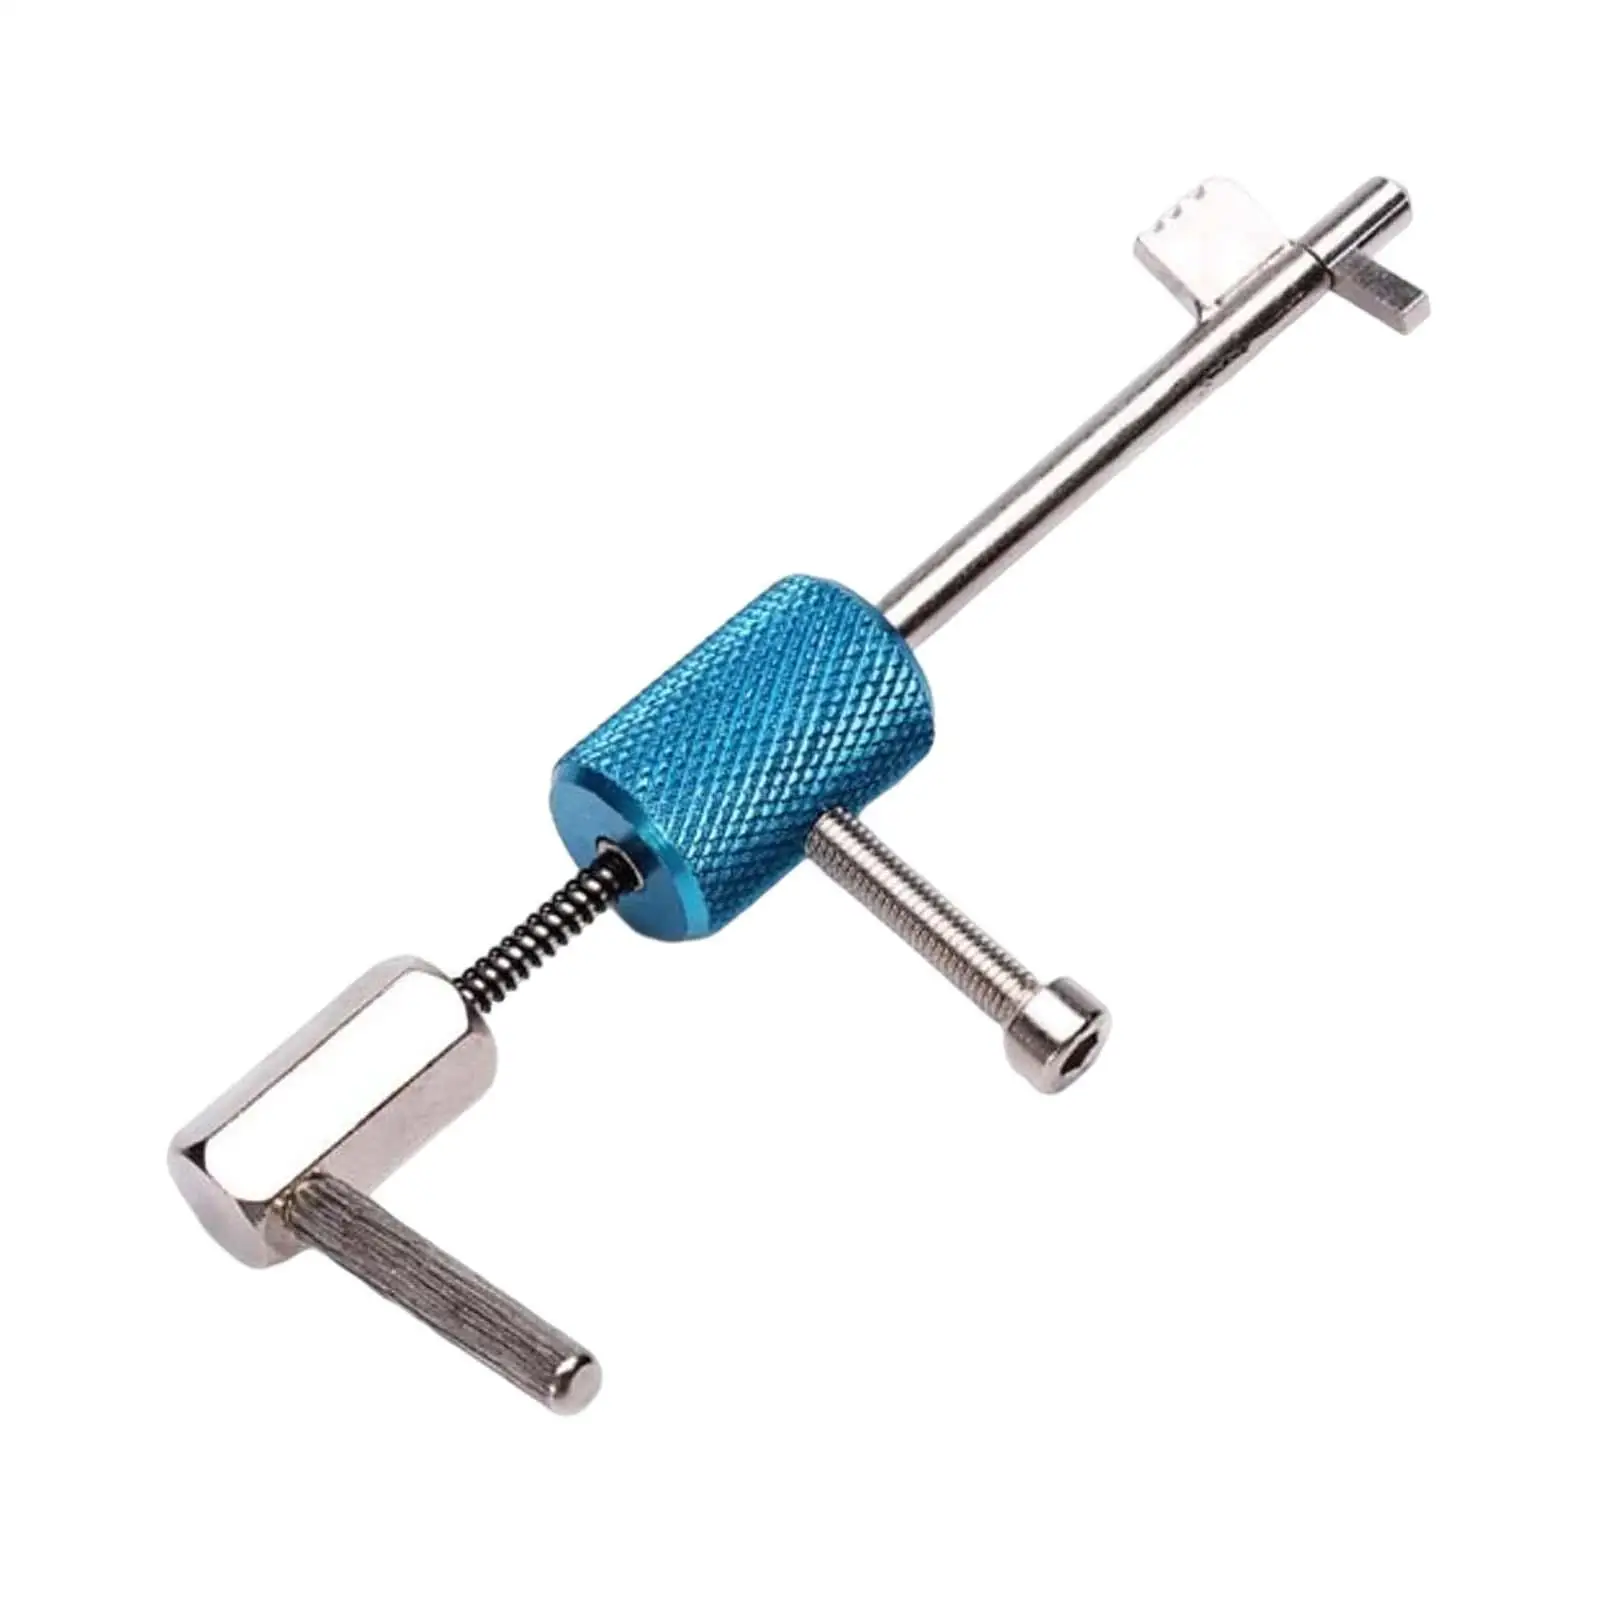 

Use Openning Household To Tool Wrench Stainless Picks Steel Easy Lock Locks Tool Civil Hand Lock Opener